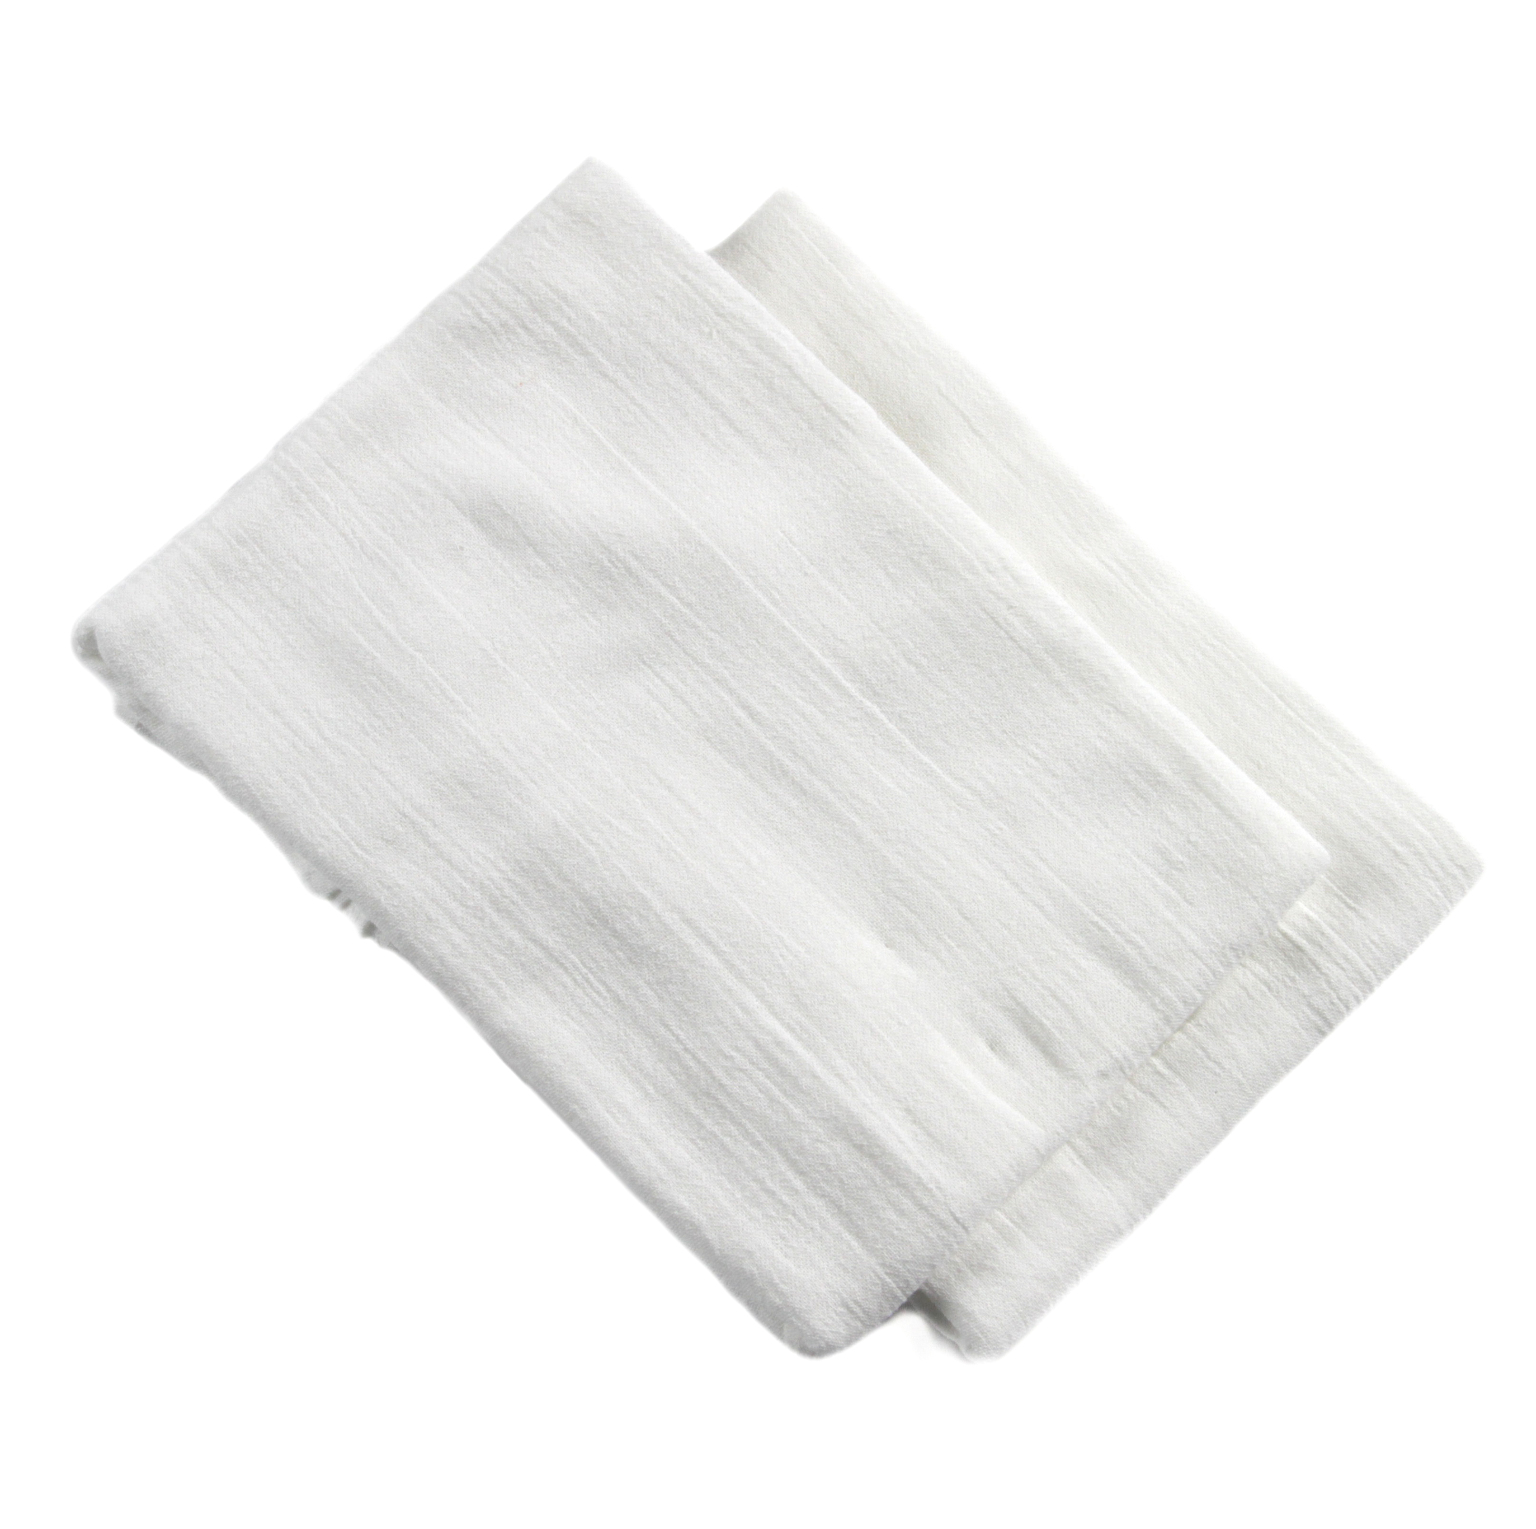 Wholesale Chef Craft Flour Sack Towel-38 x 22